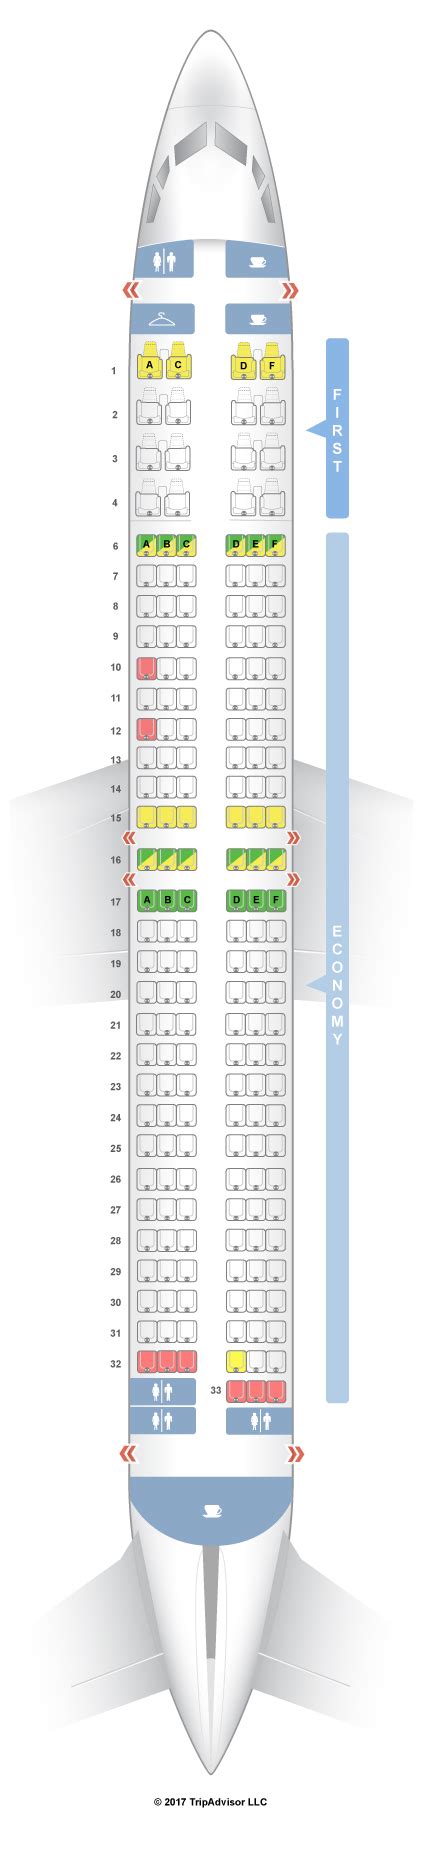 alaska air boeing 737-900 seating chart